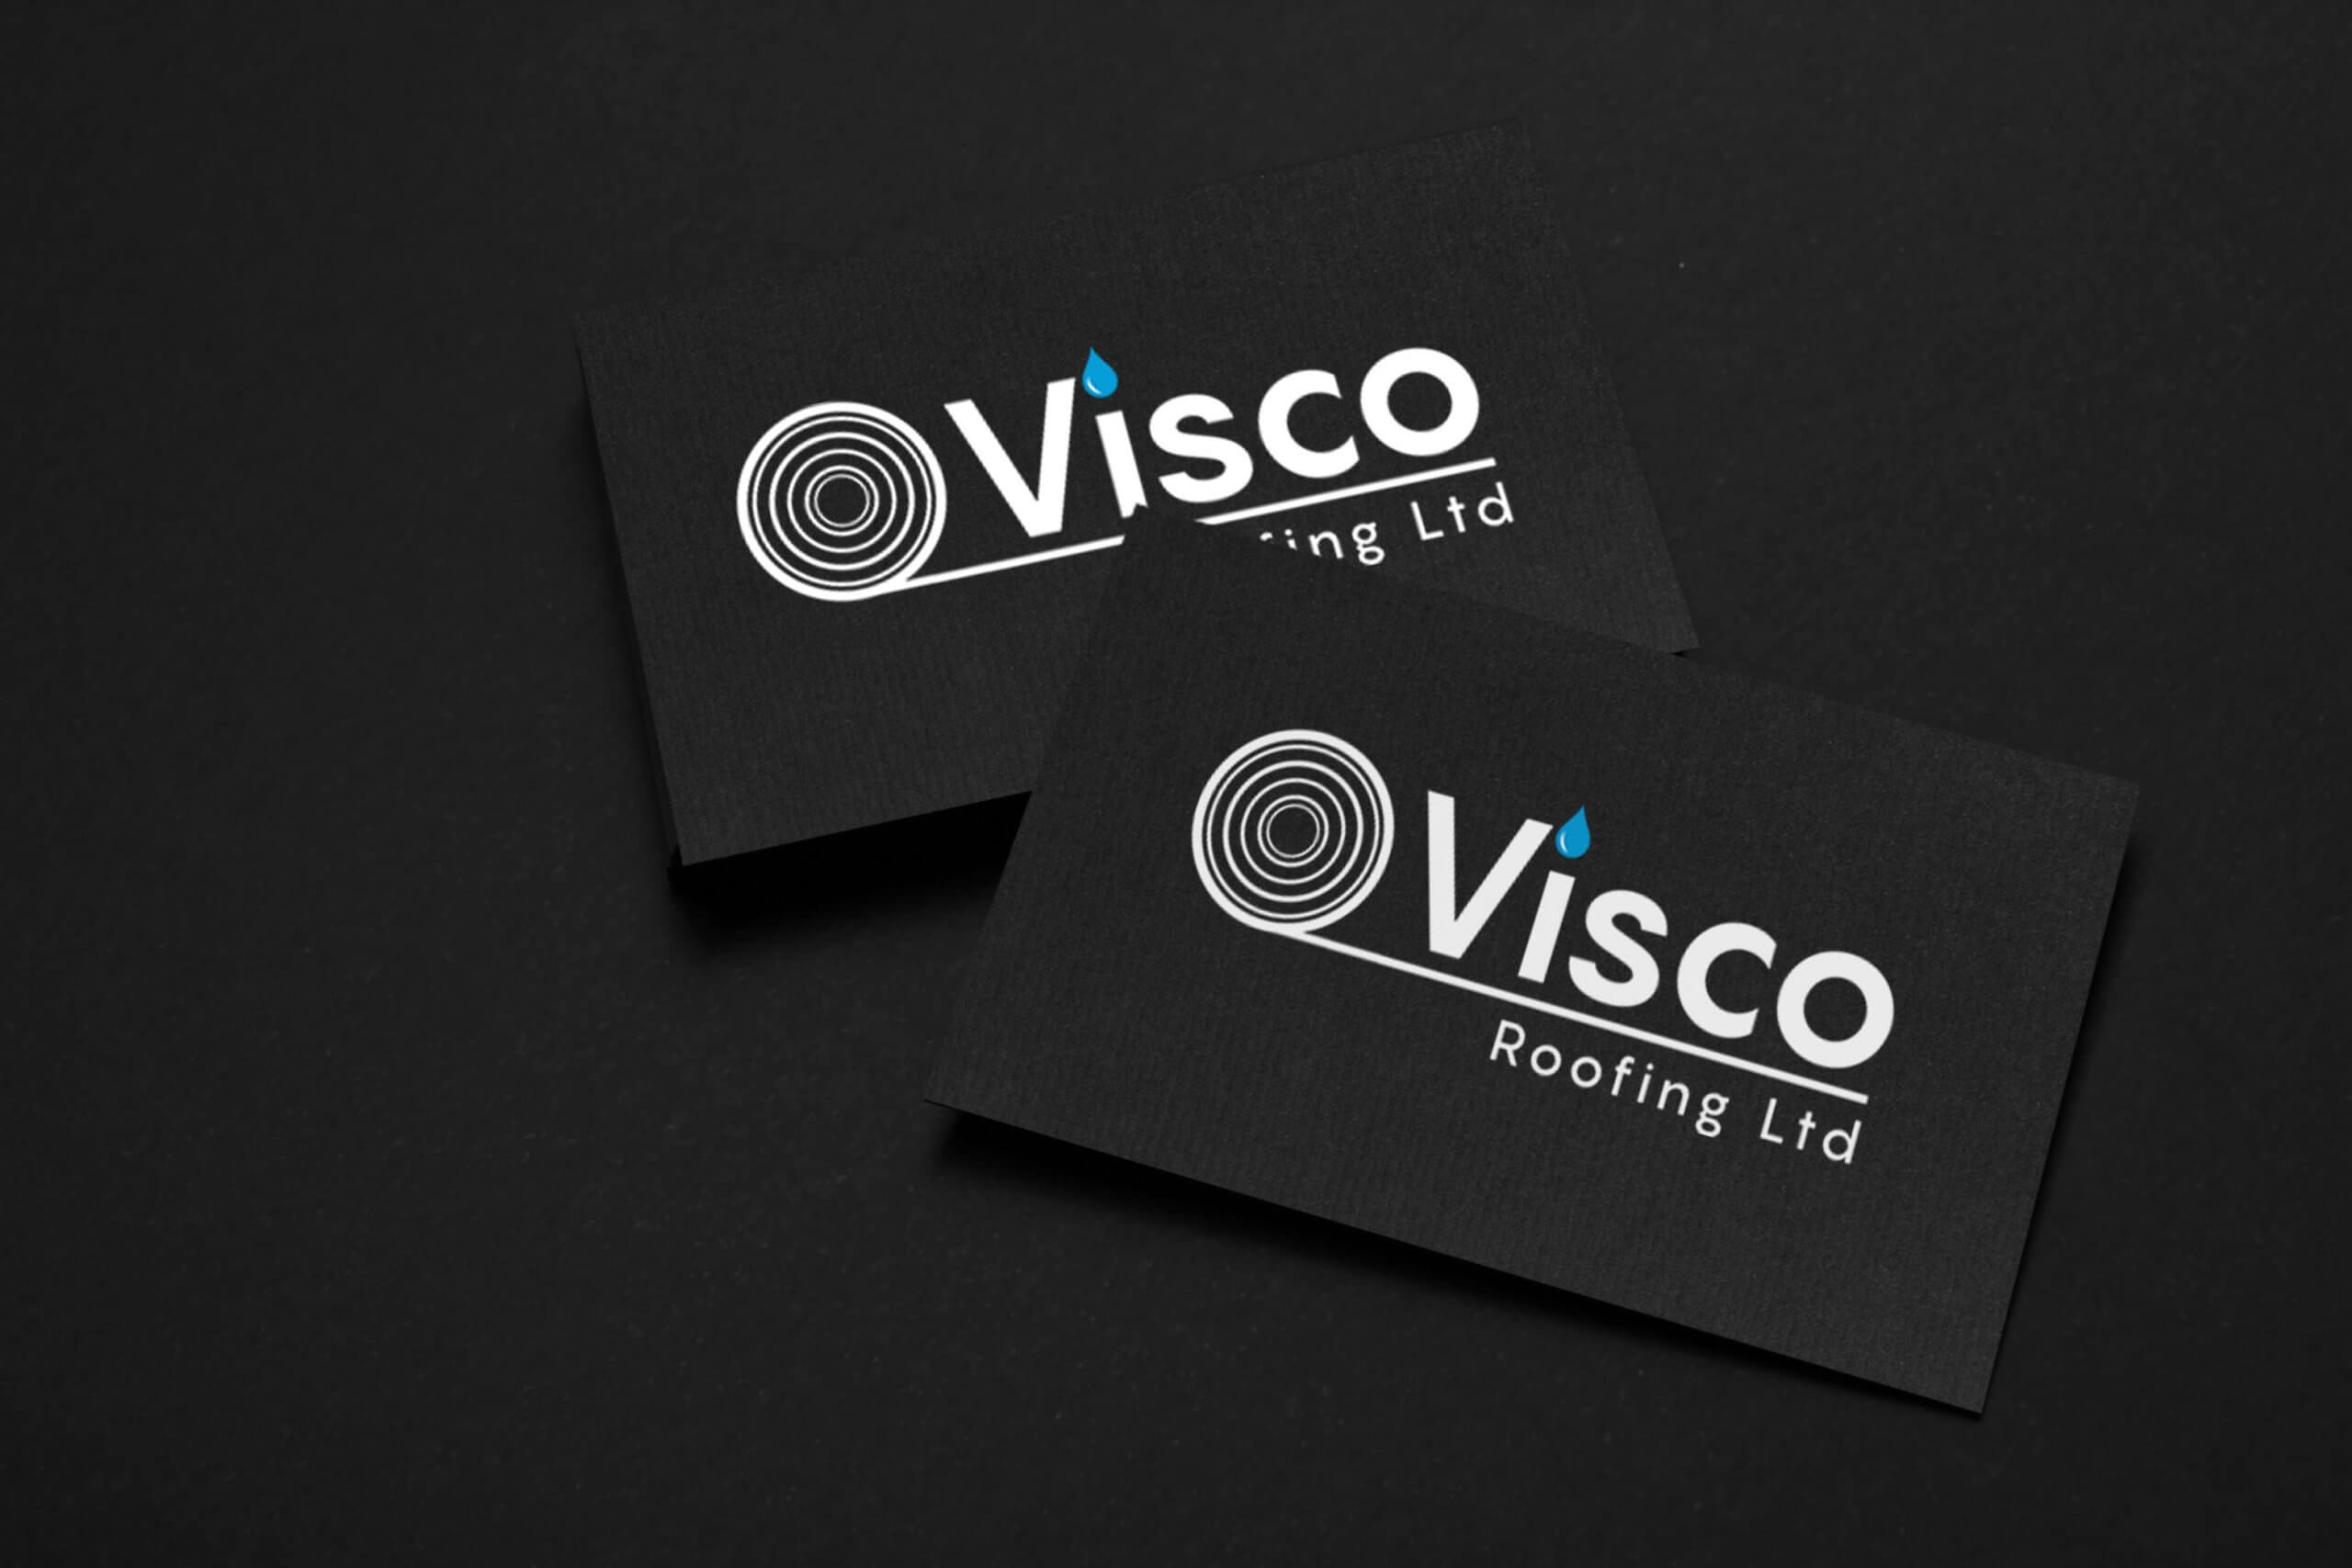 Visco Black Textured Business Card